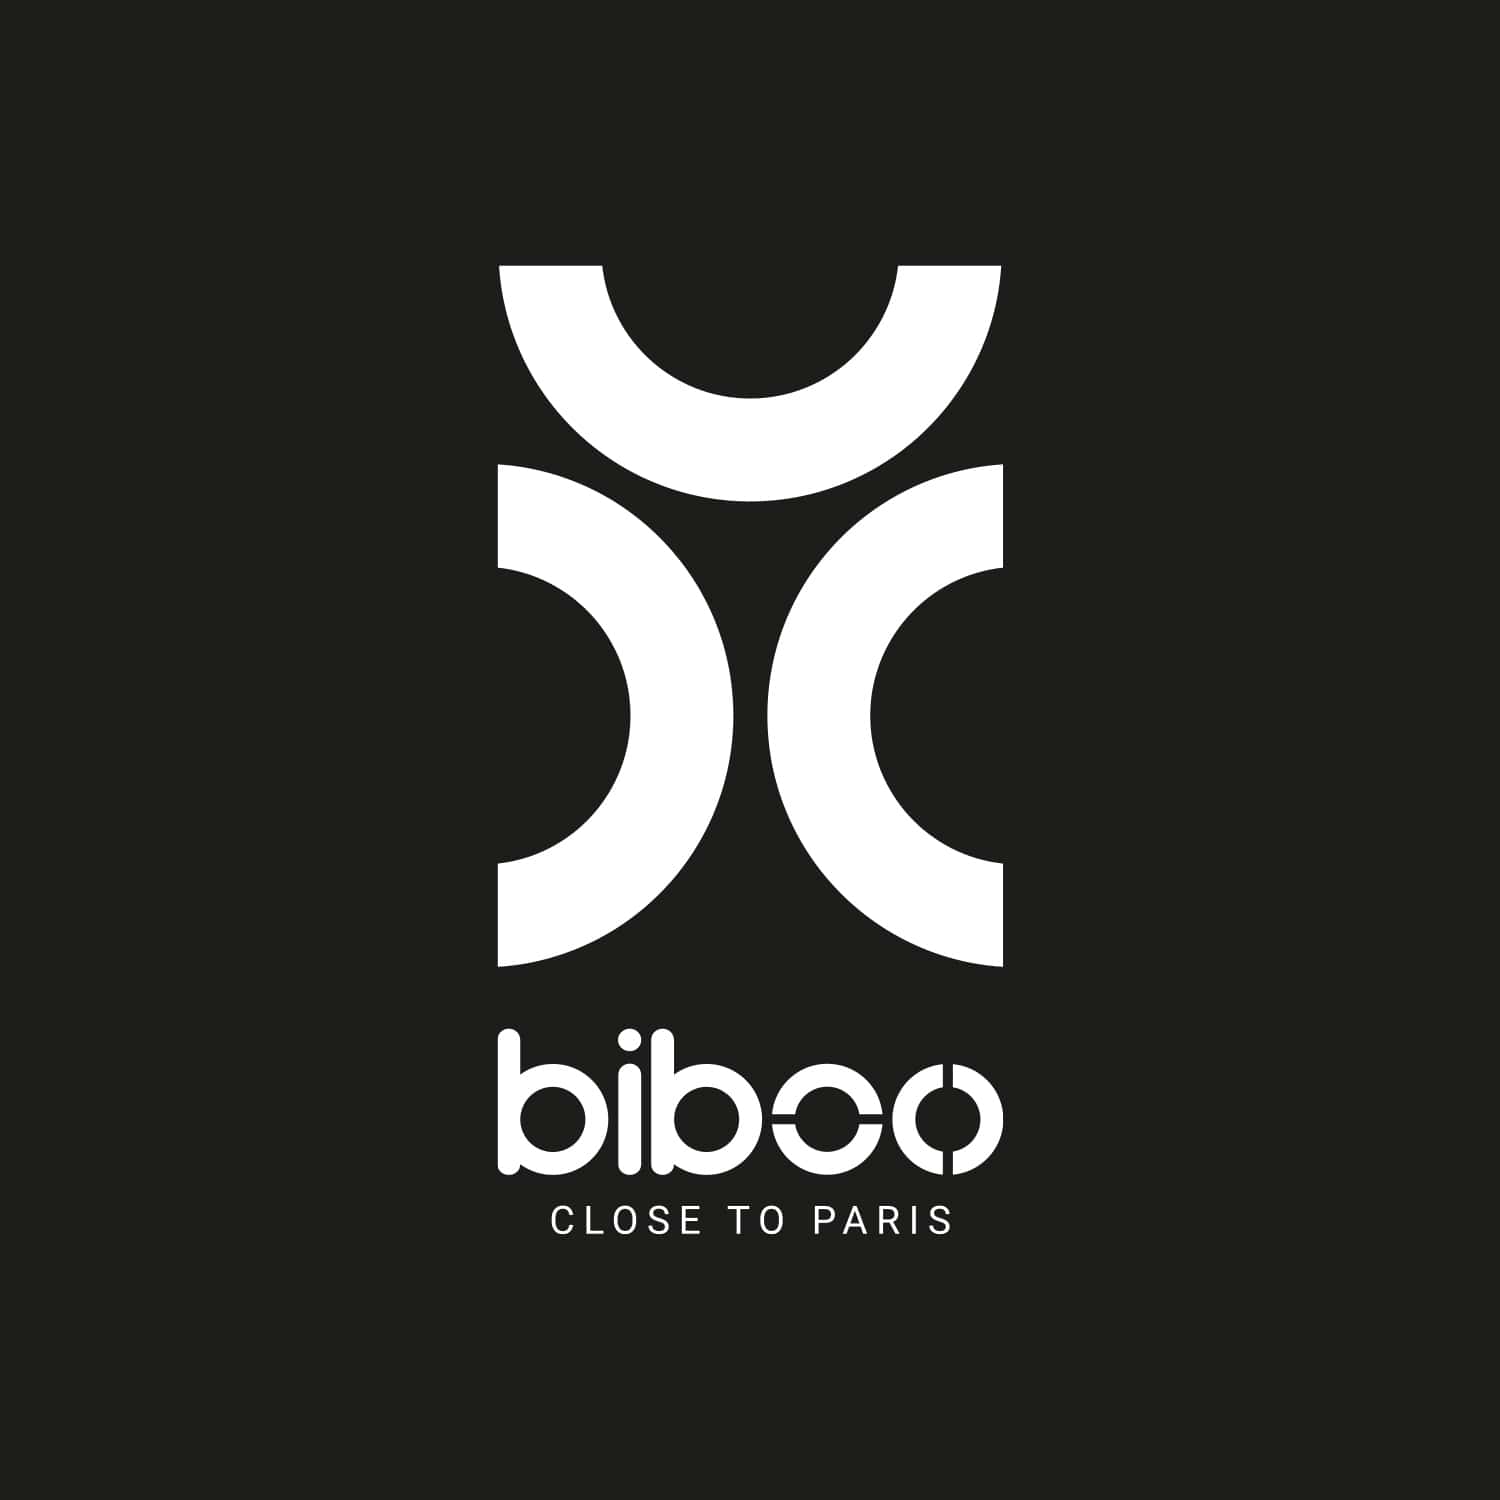 Création logo - Marque Biboo